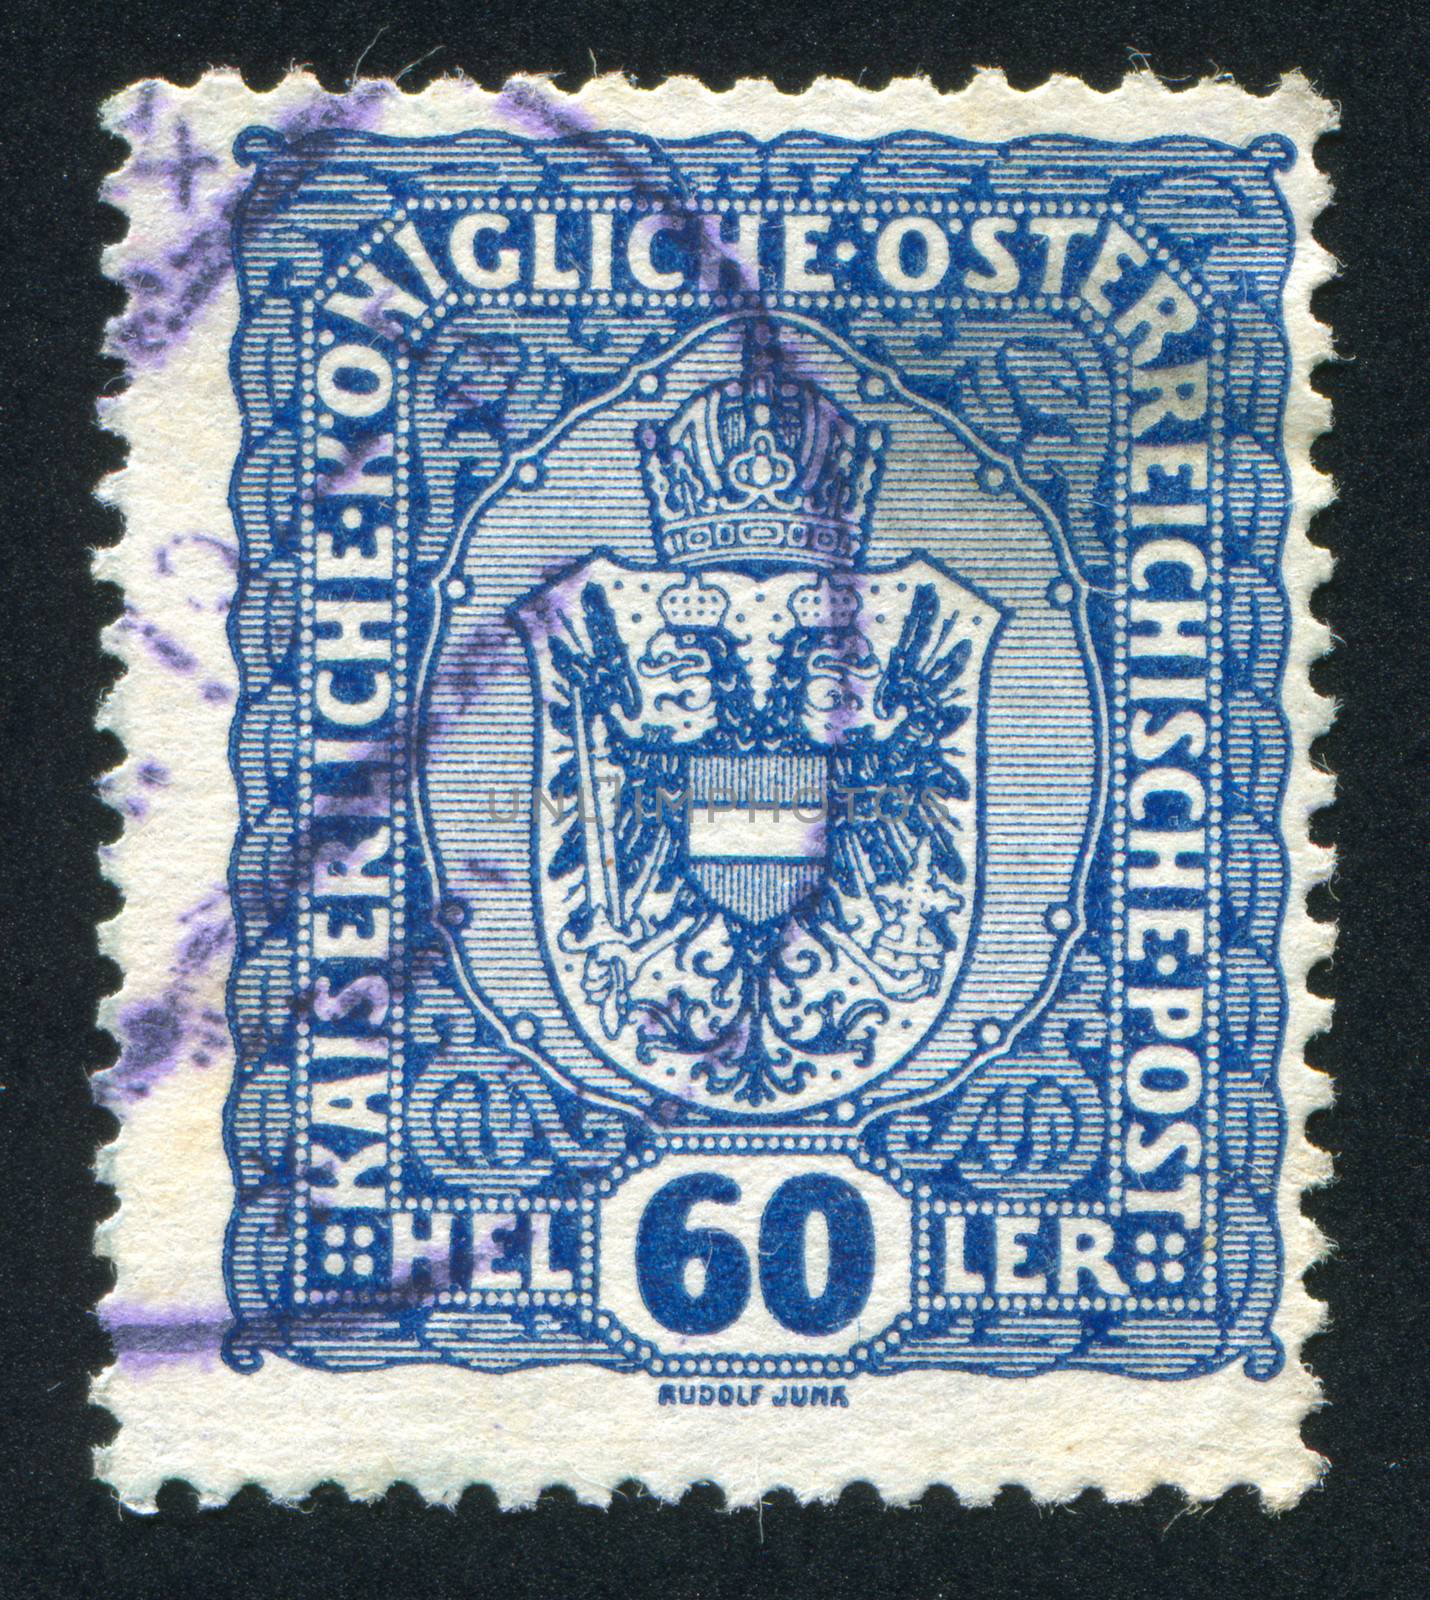 AUSTRIA - CIRCA 1916: stamp printed by Austria, shows crown and eagle, circa 1916